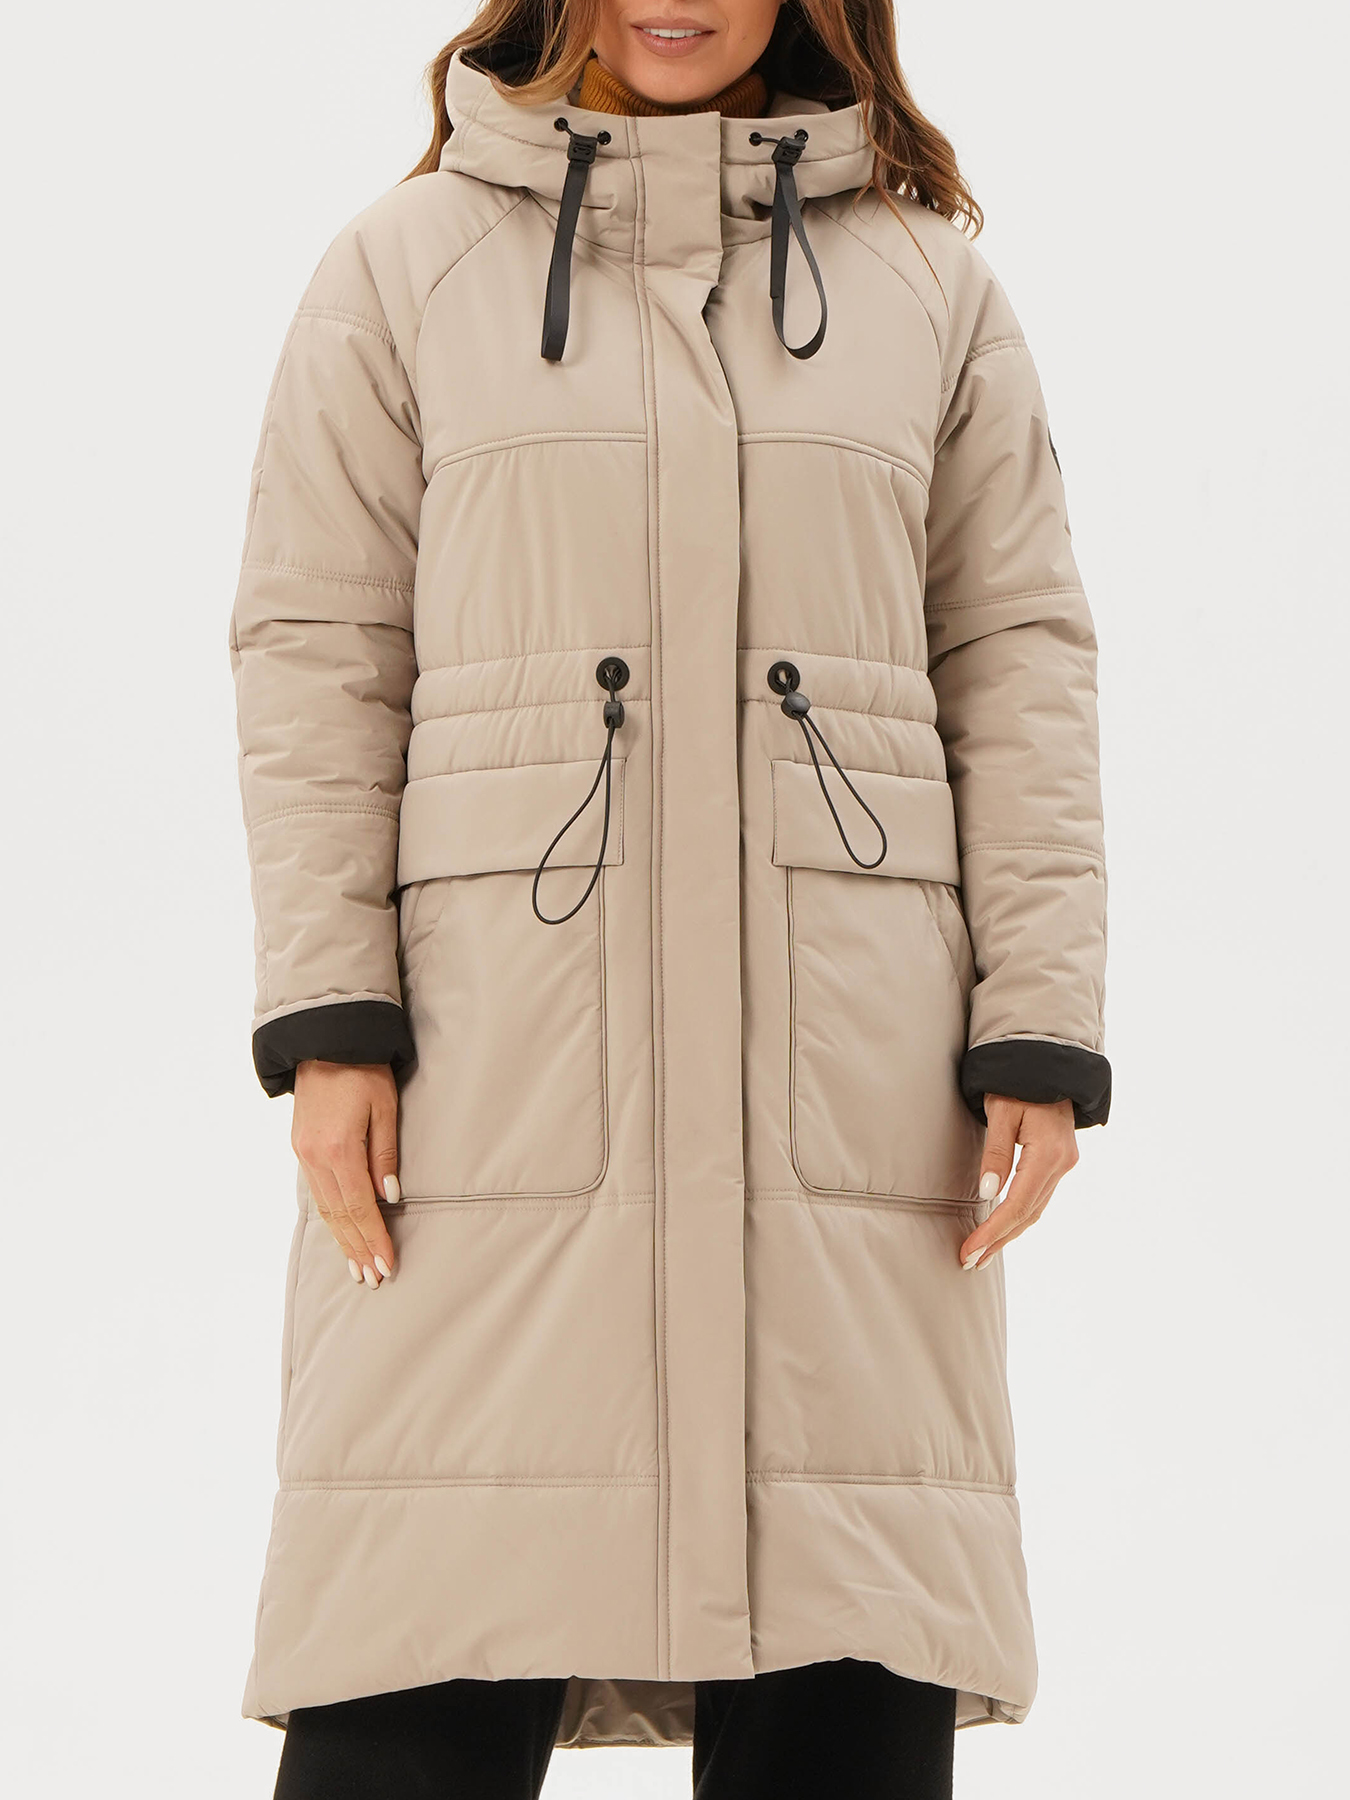 Пальто зимнее Maritta 433564-024, цвет бежевый, размер 52 - фото 1